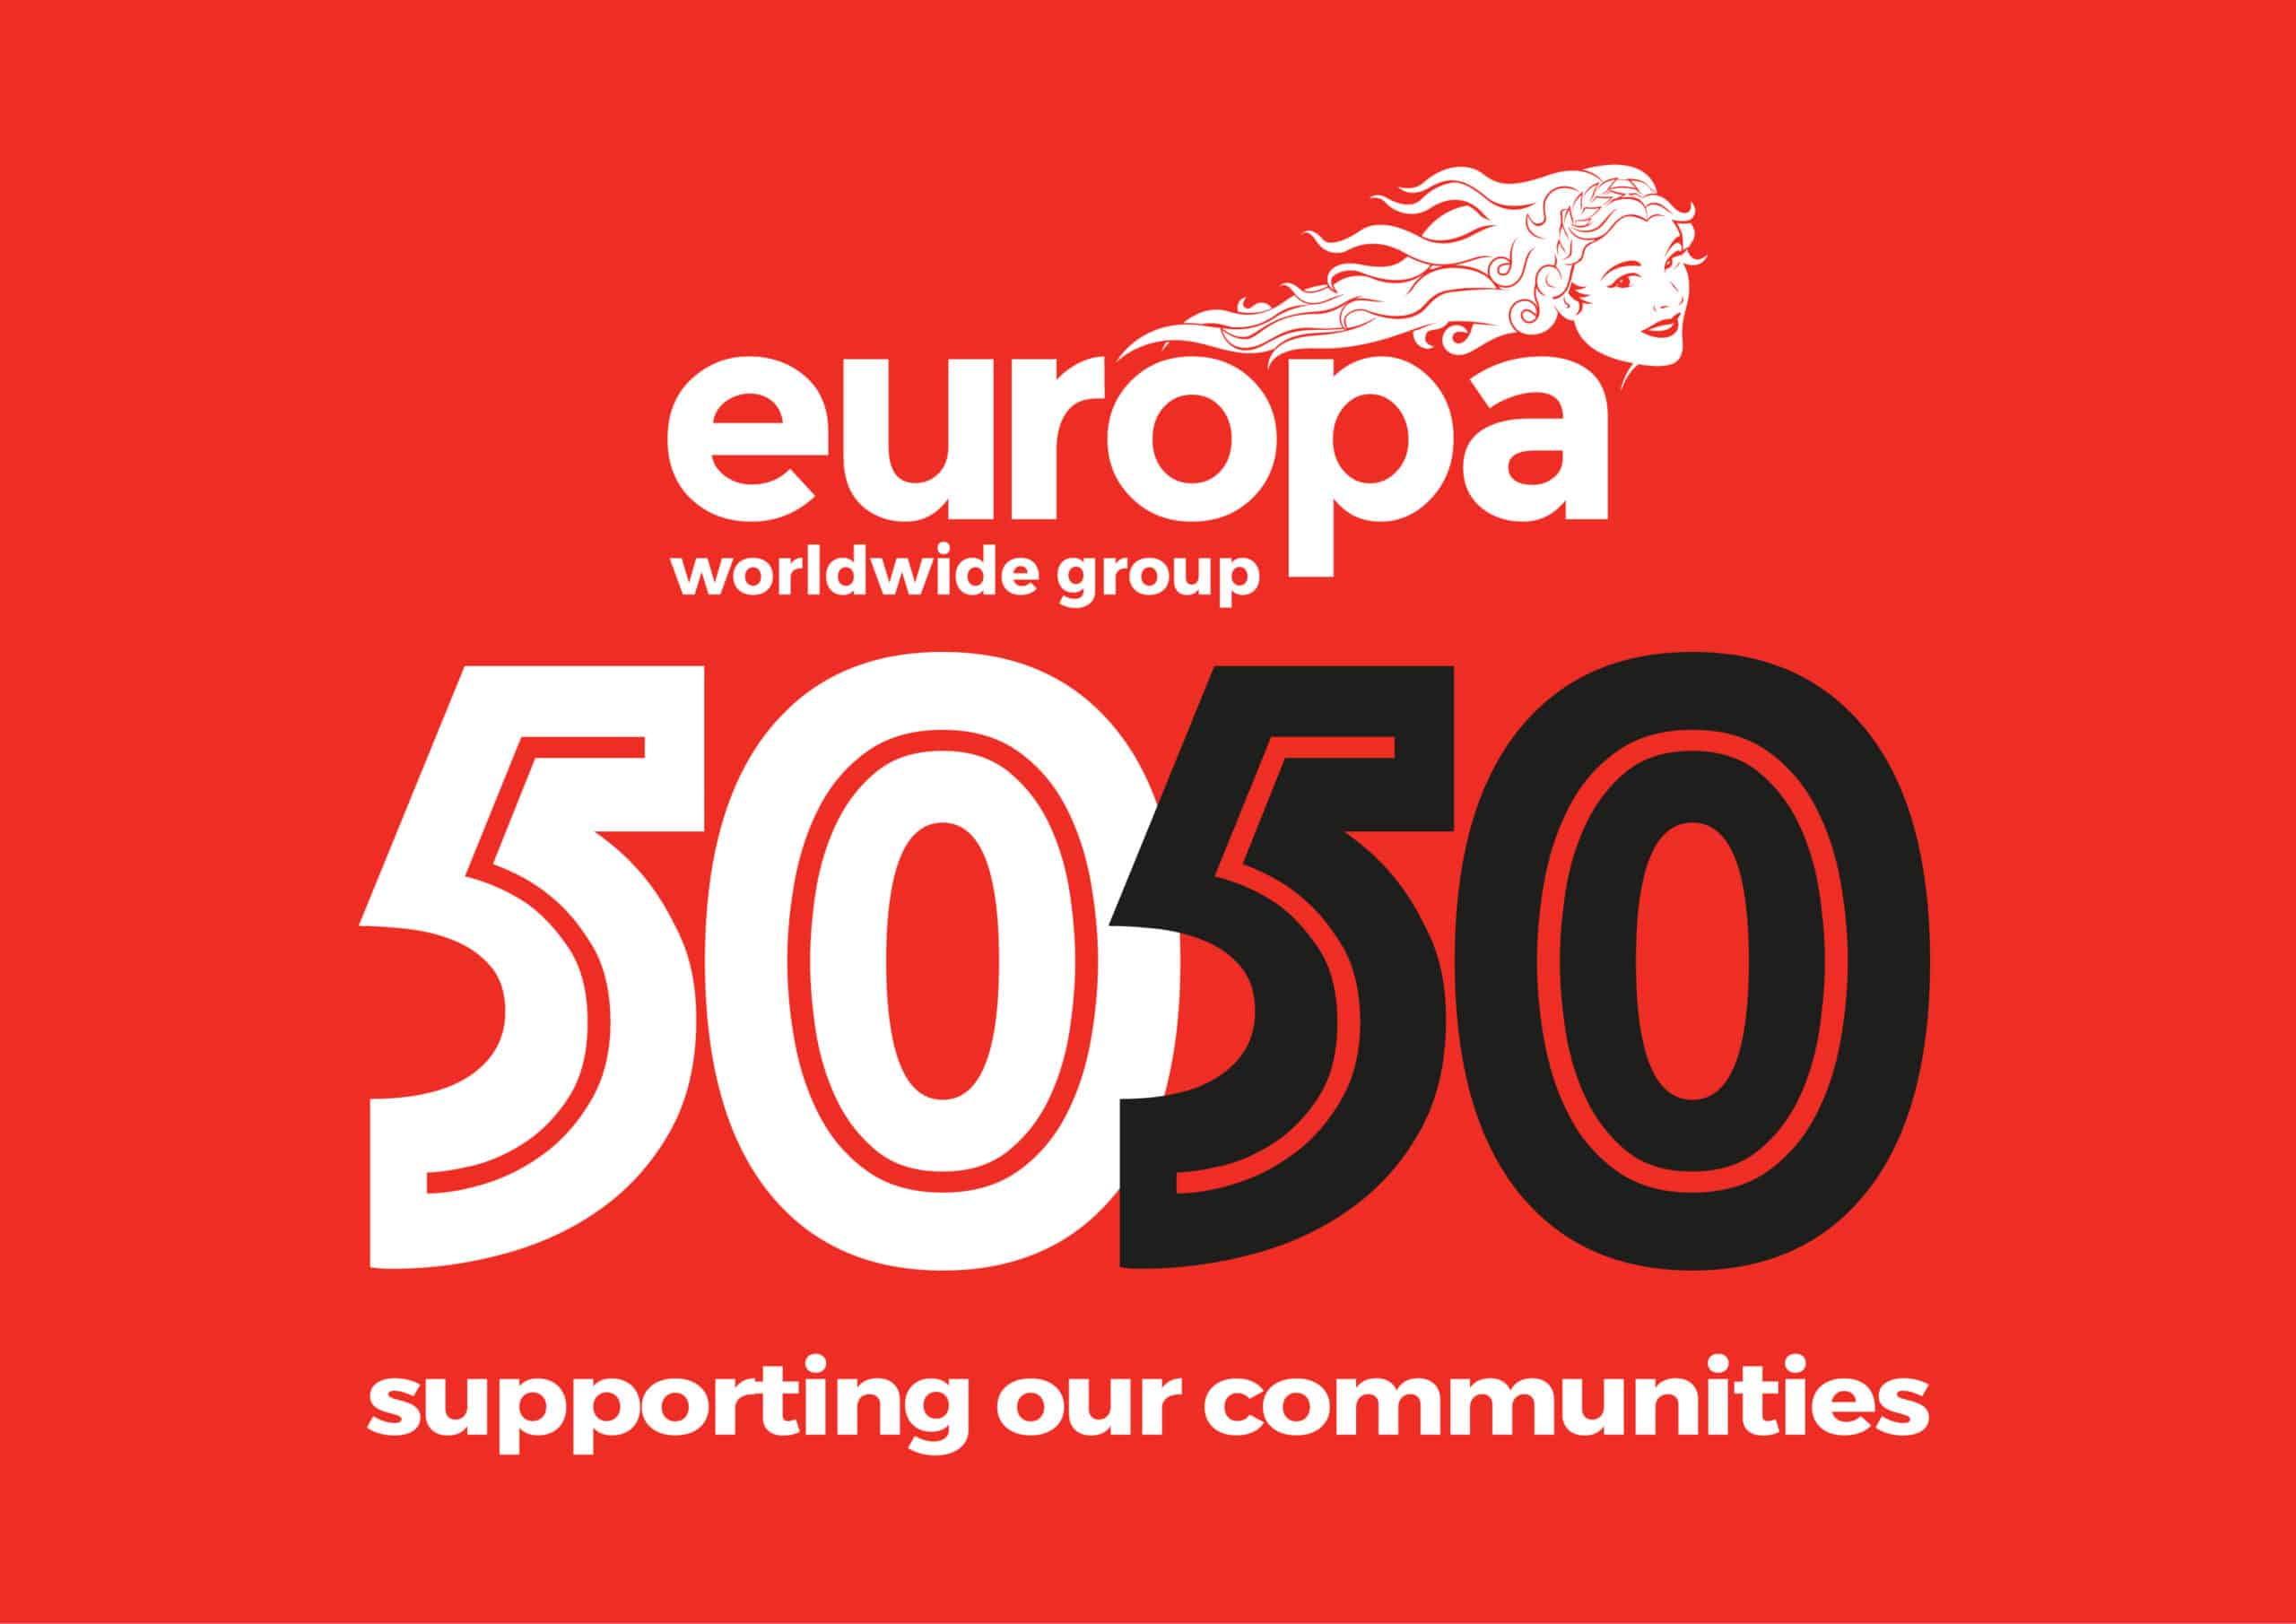 Europa 50:50